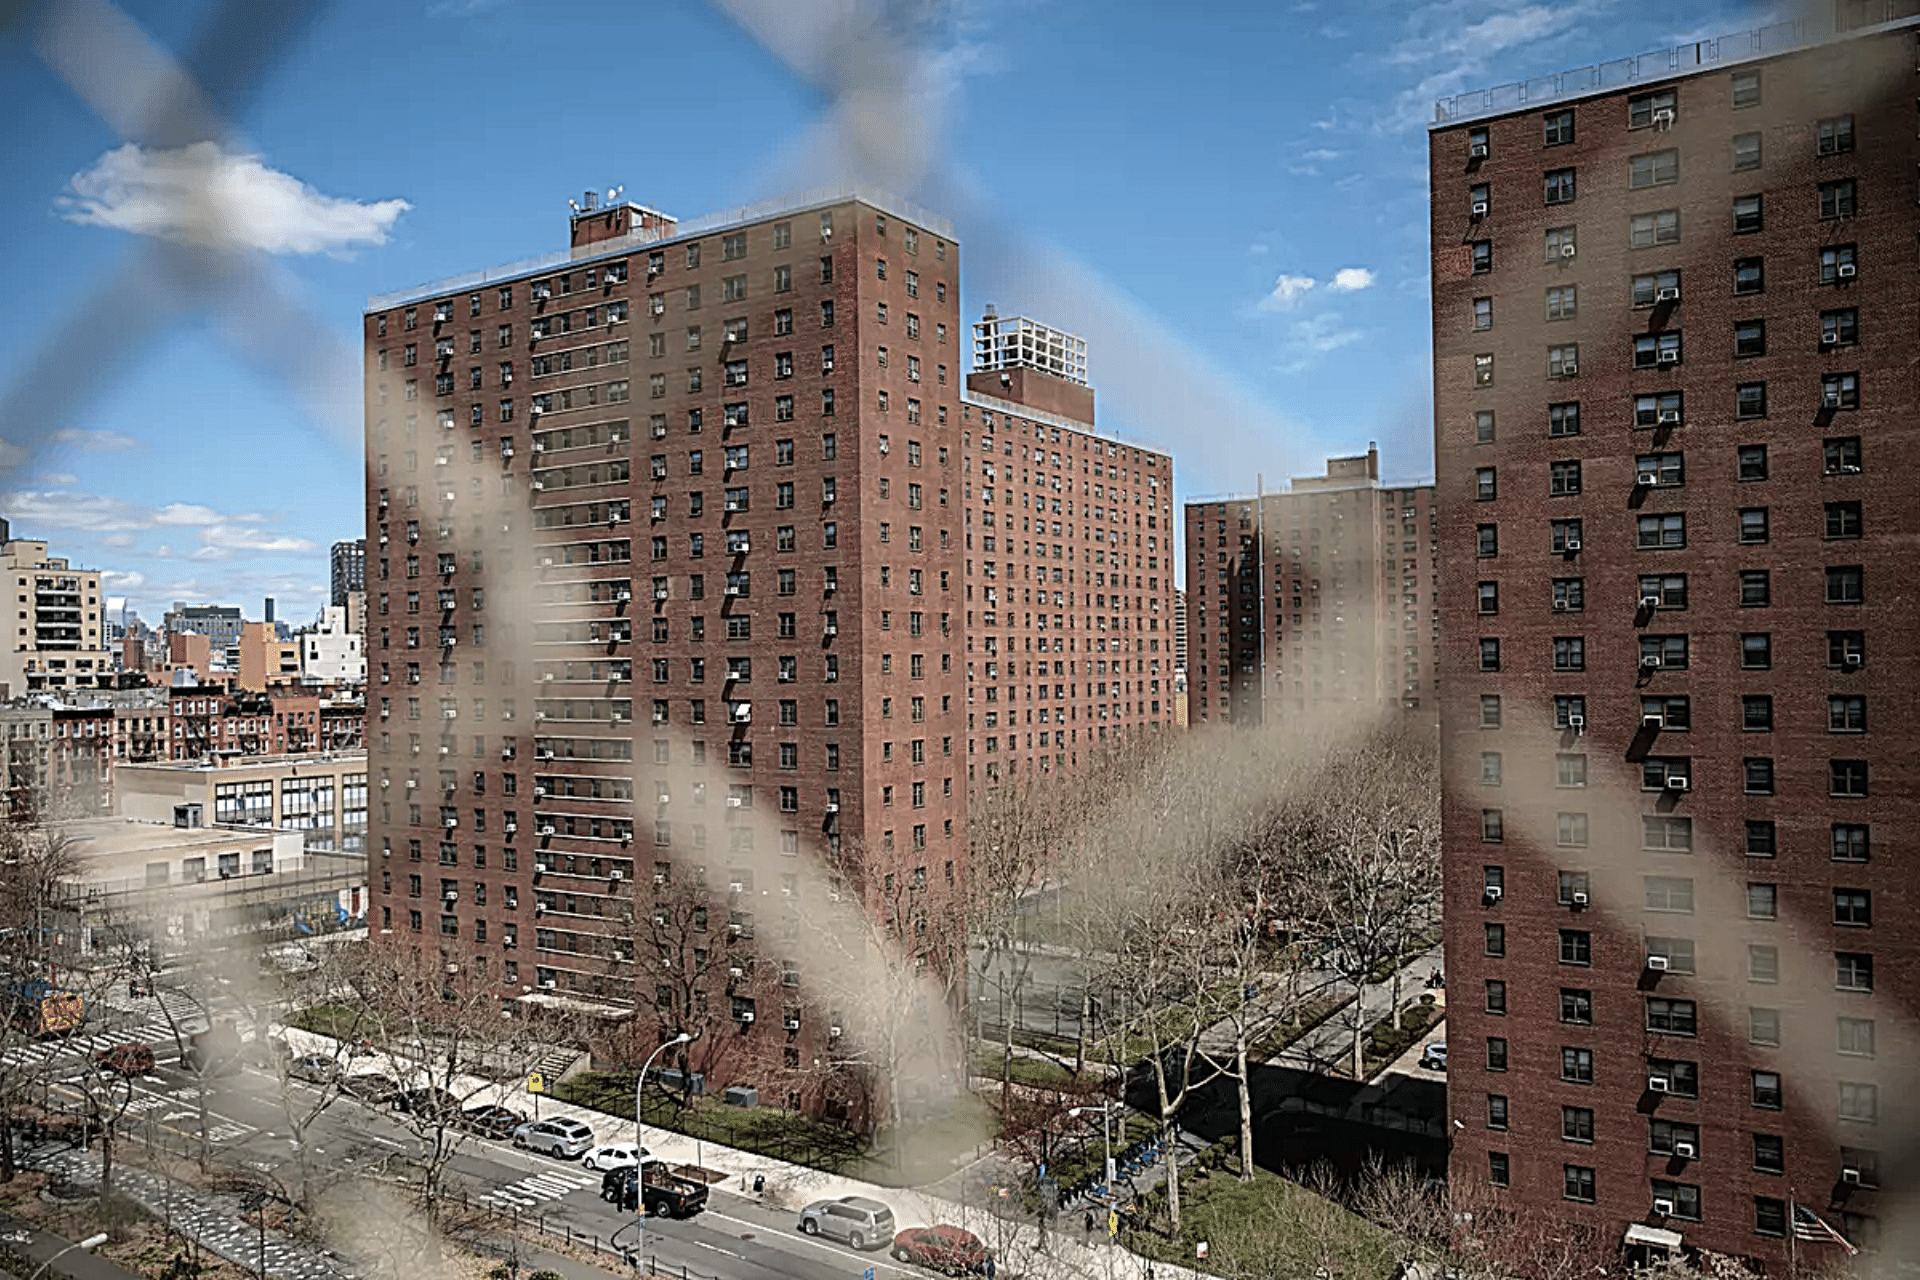 Urban-style apartment buildings